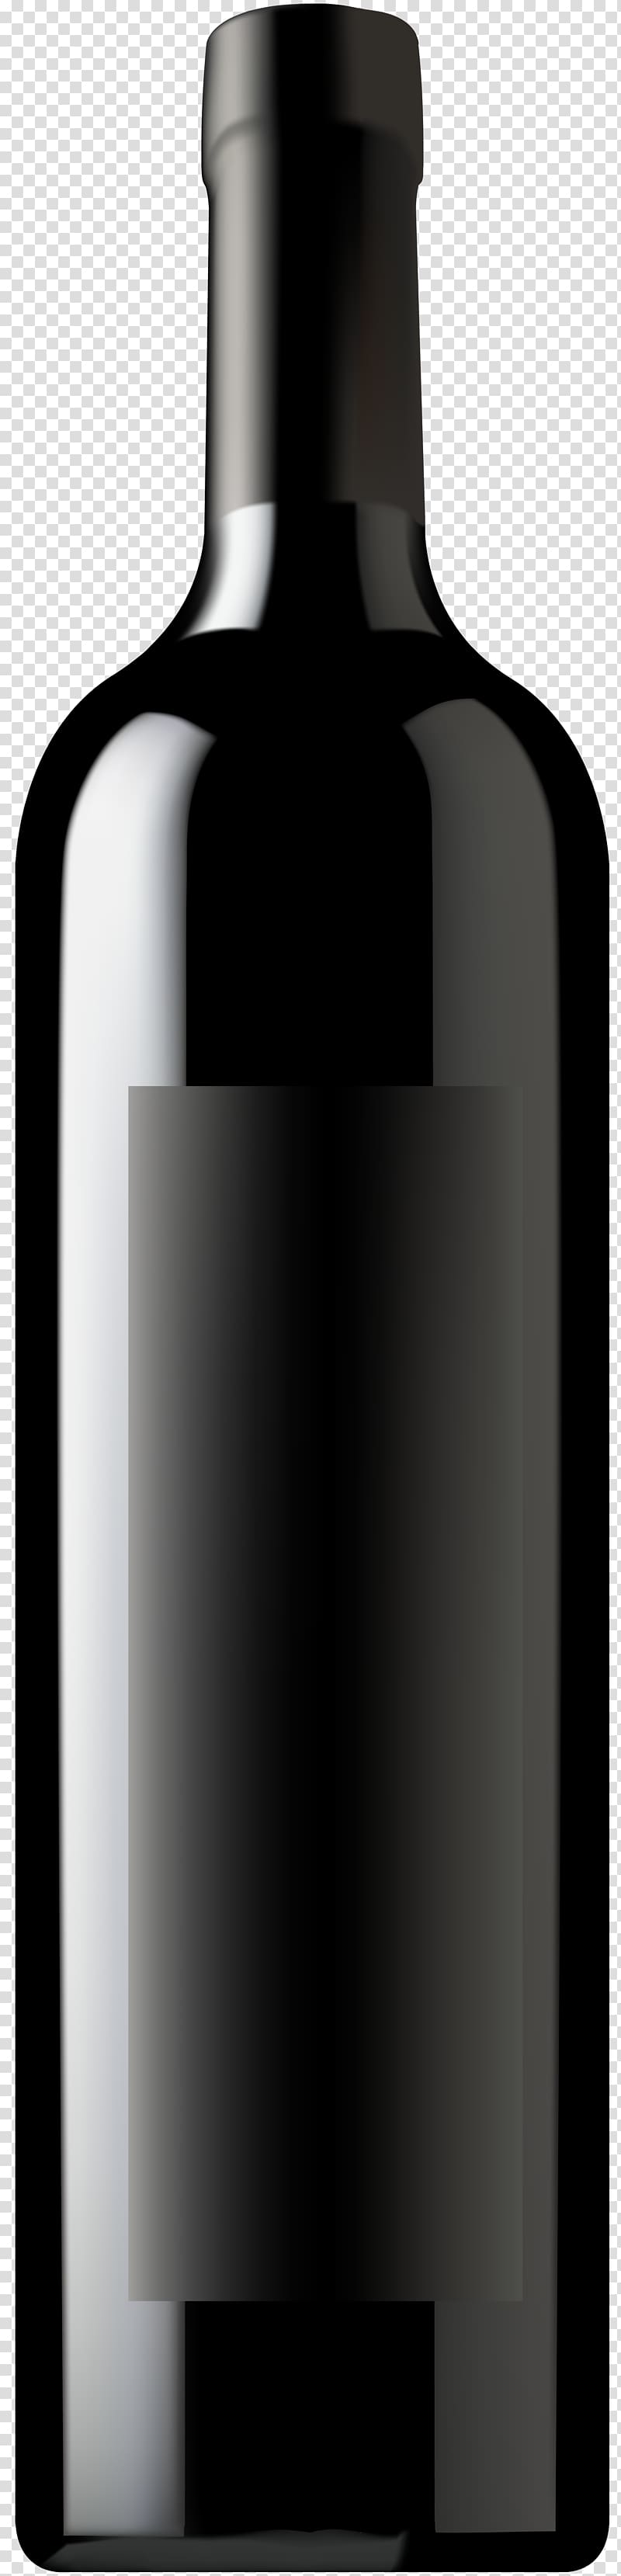 Glass bottle Material, Wine Bottle transparent background PNG clipart